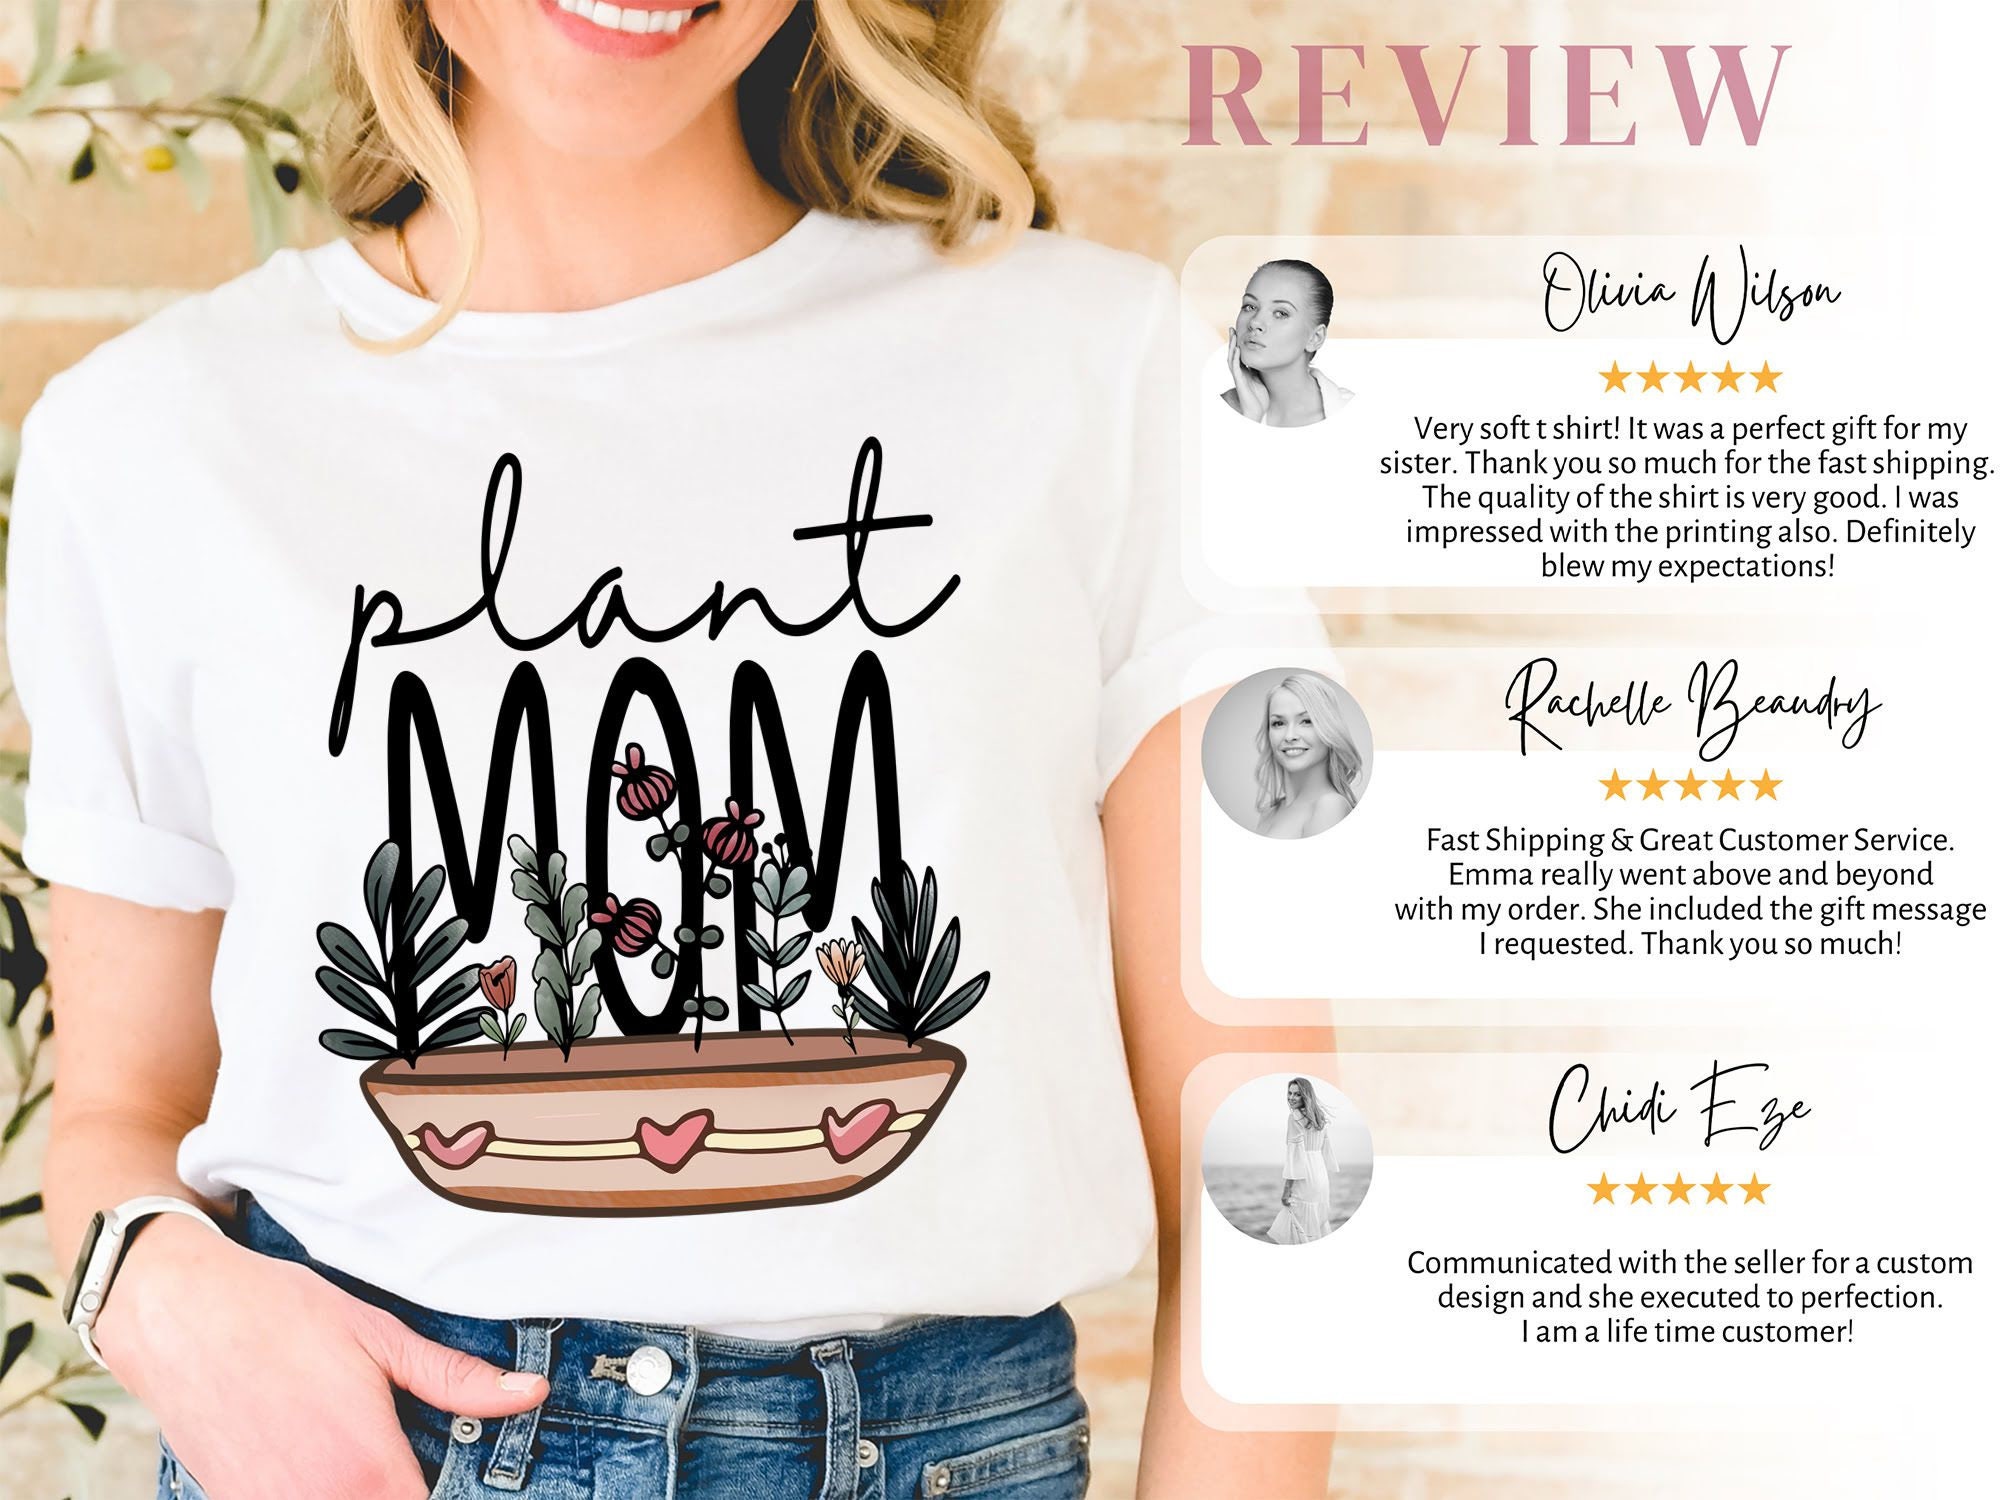 Plant Mom Shirt Plant Mama Plant Lady Funny Graphic Tee -  Norway